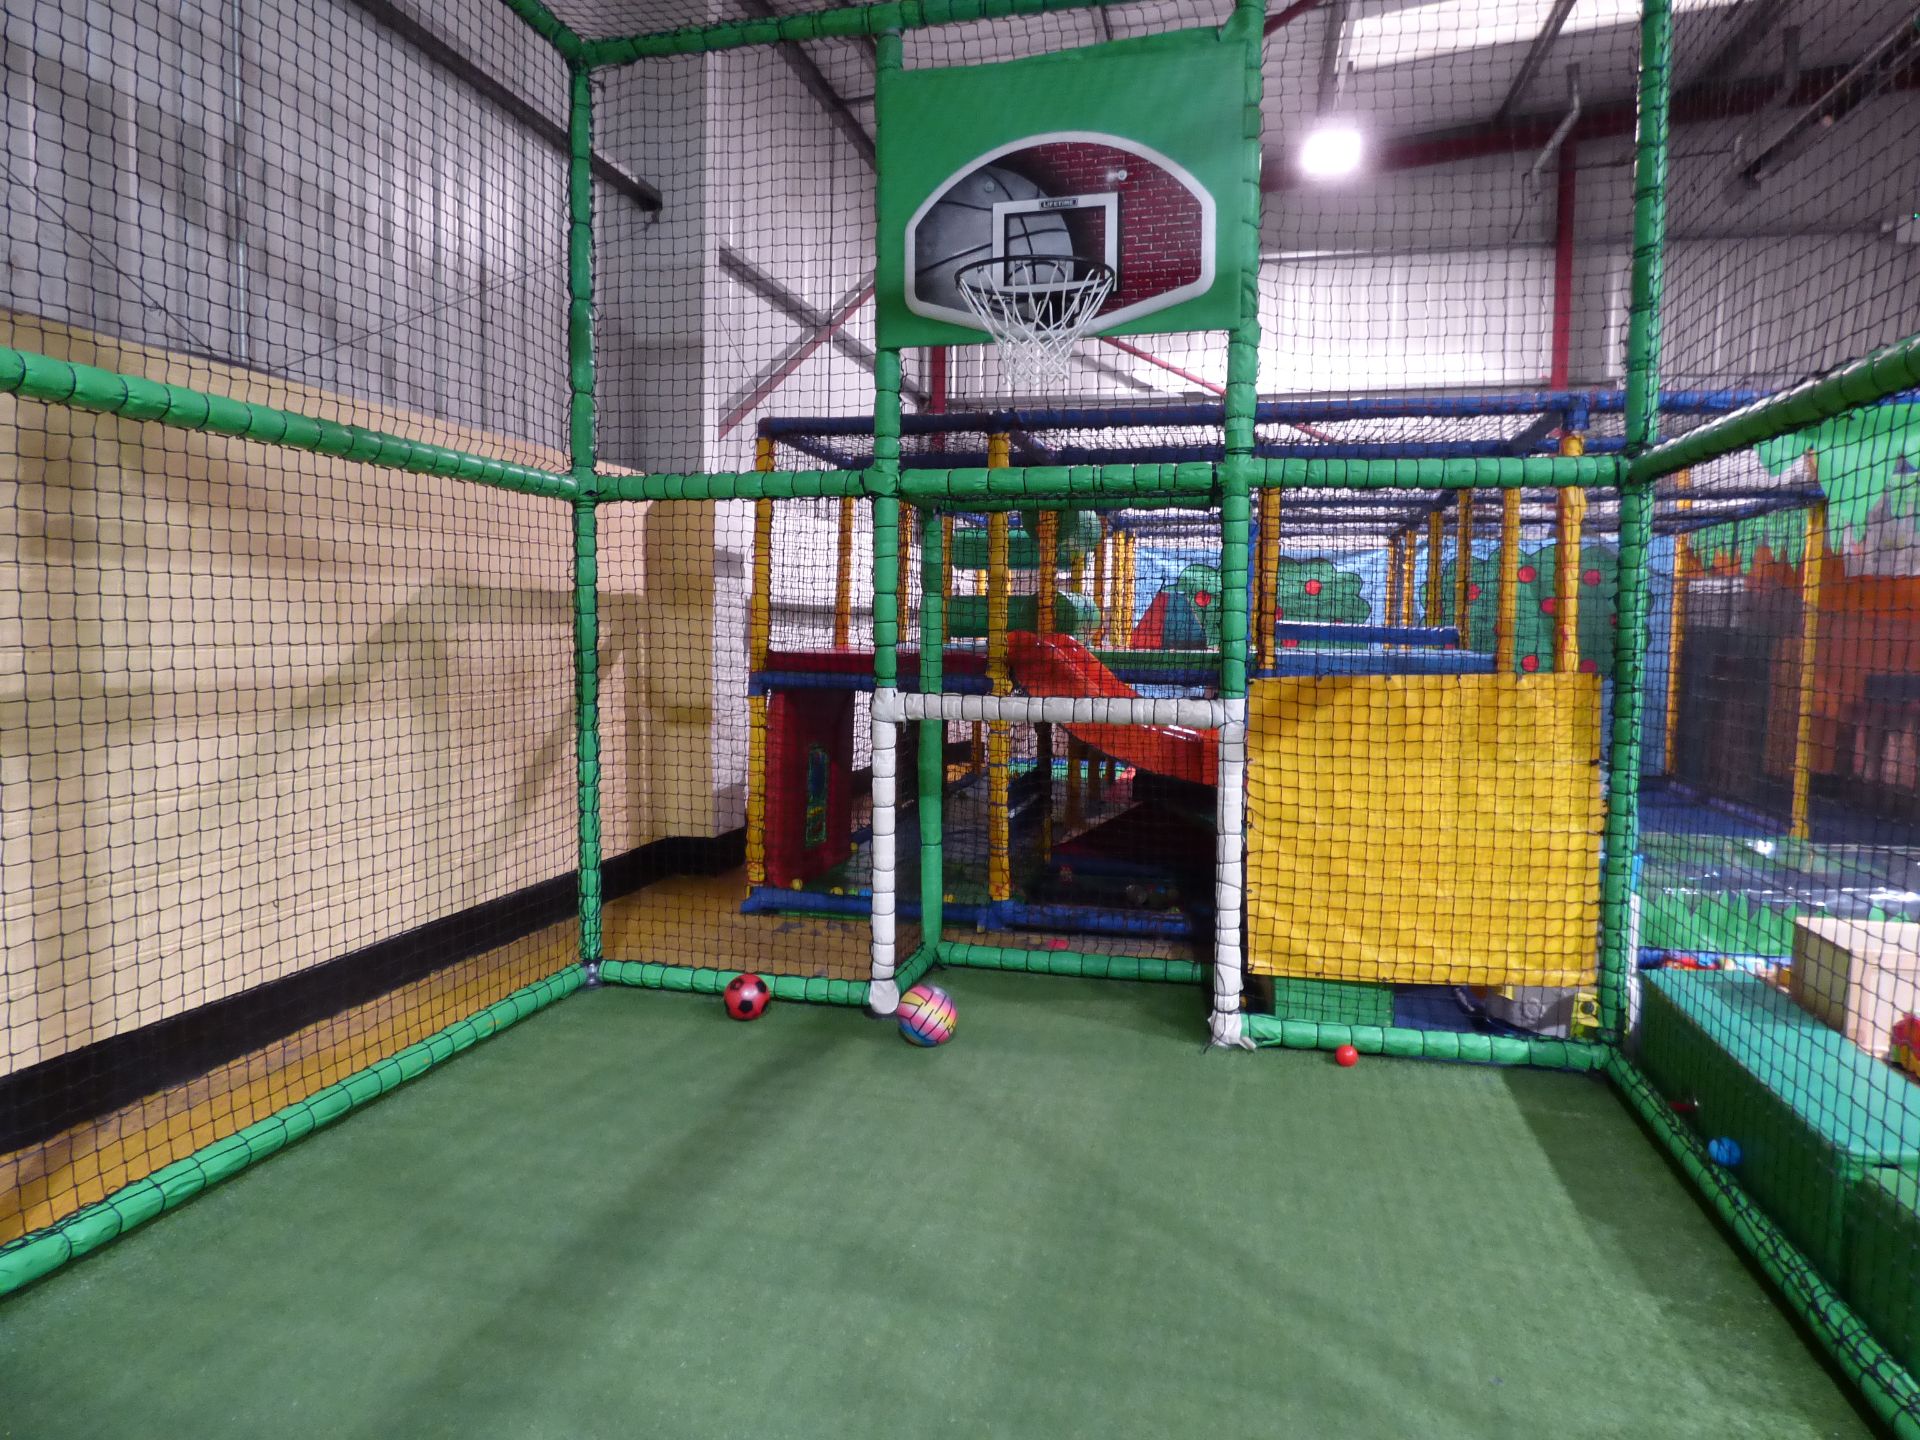 Football/Netball (Basketball) Court Area - Bild 3 aus 8